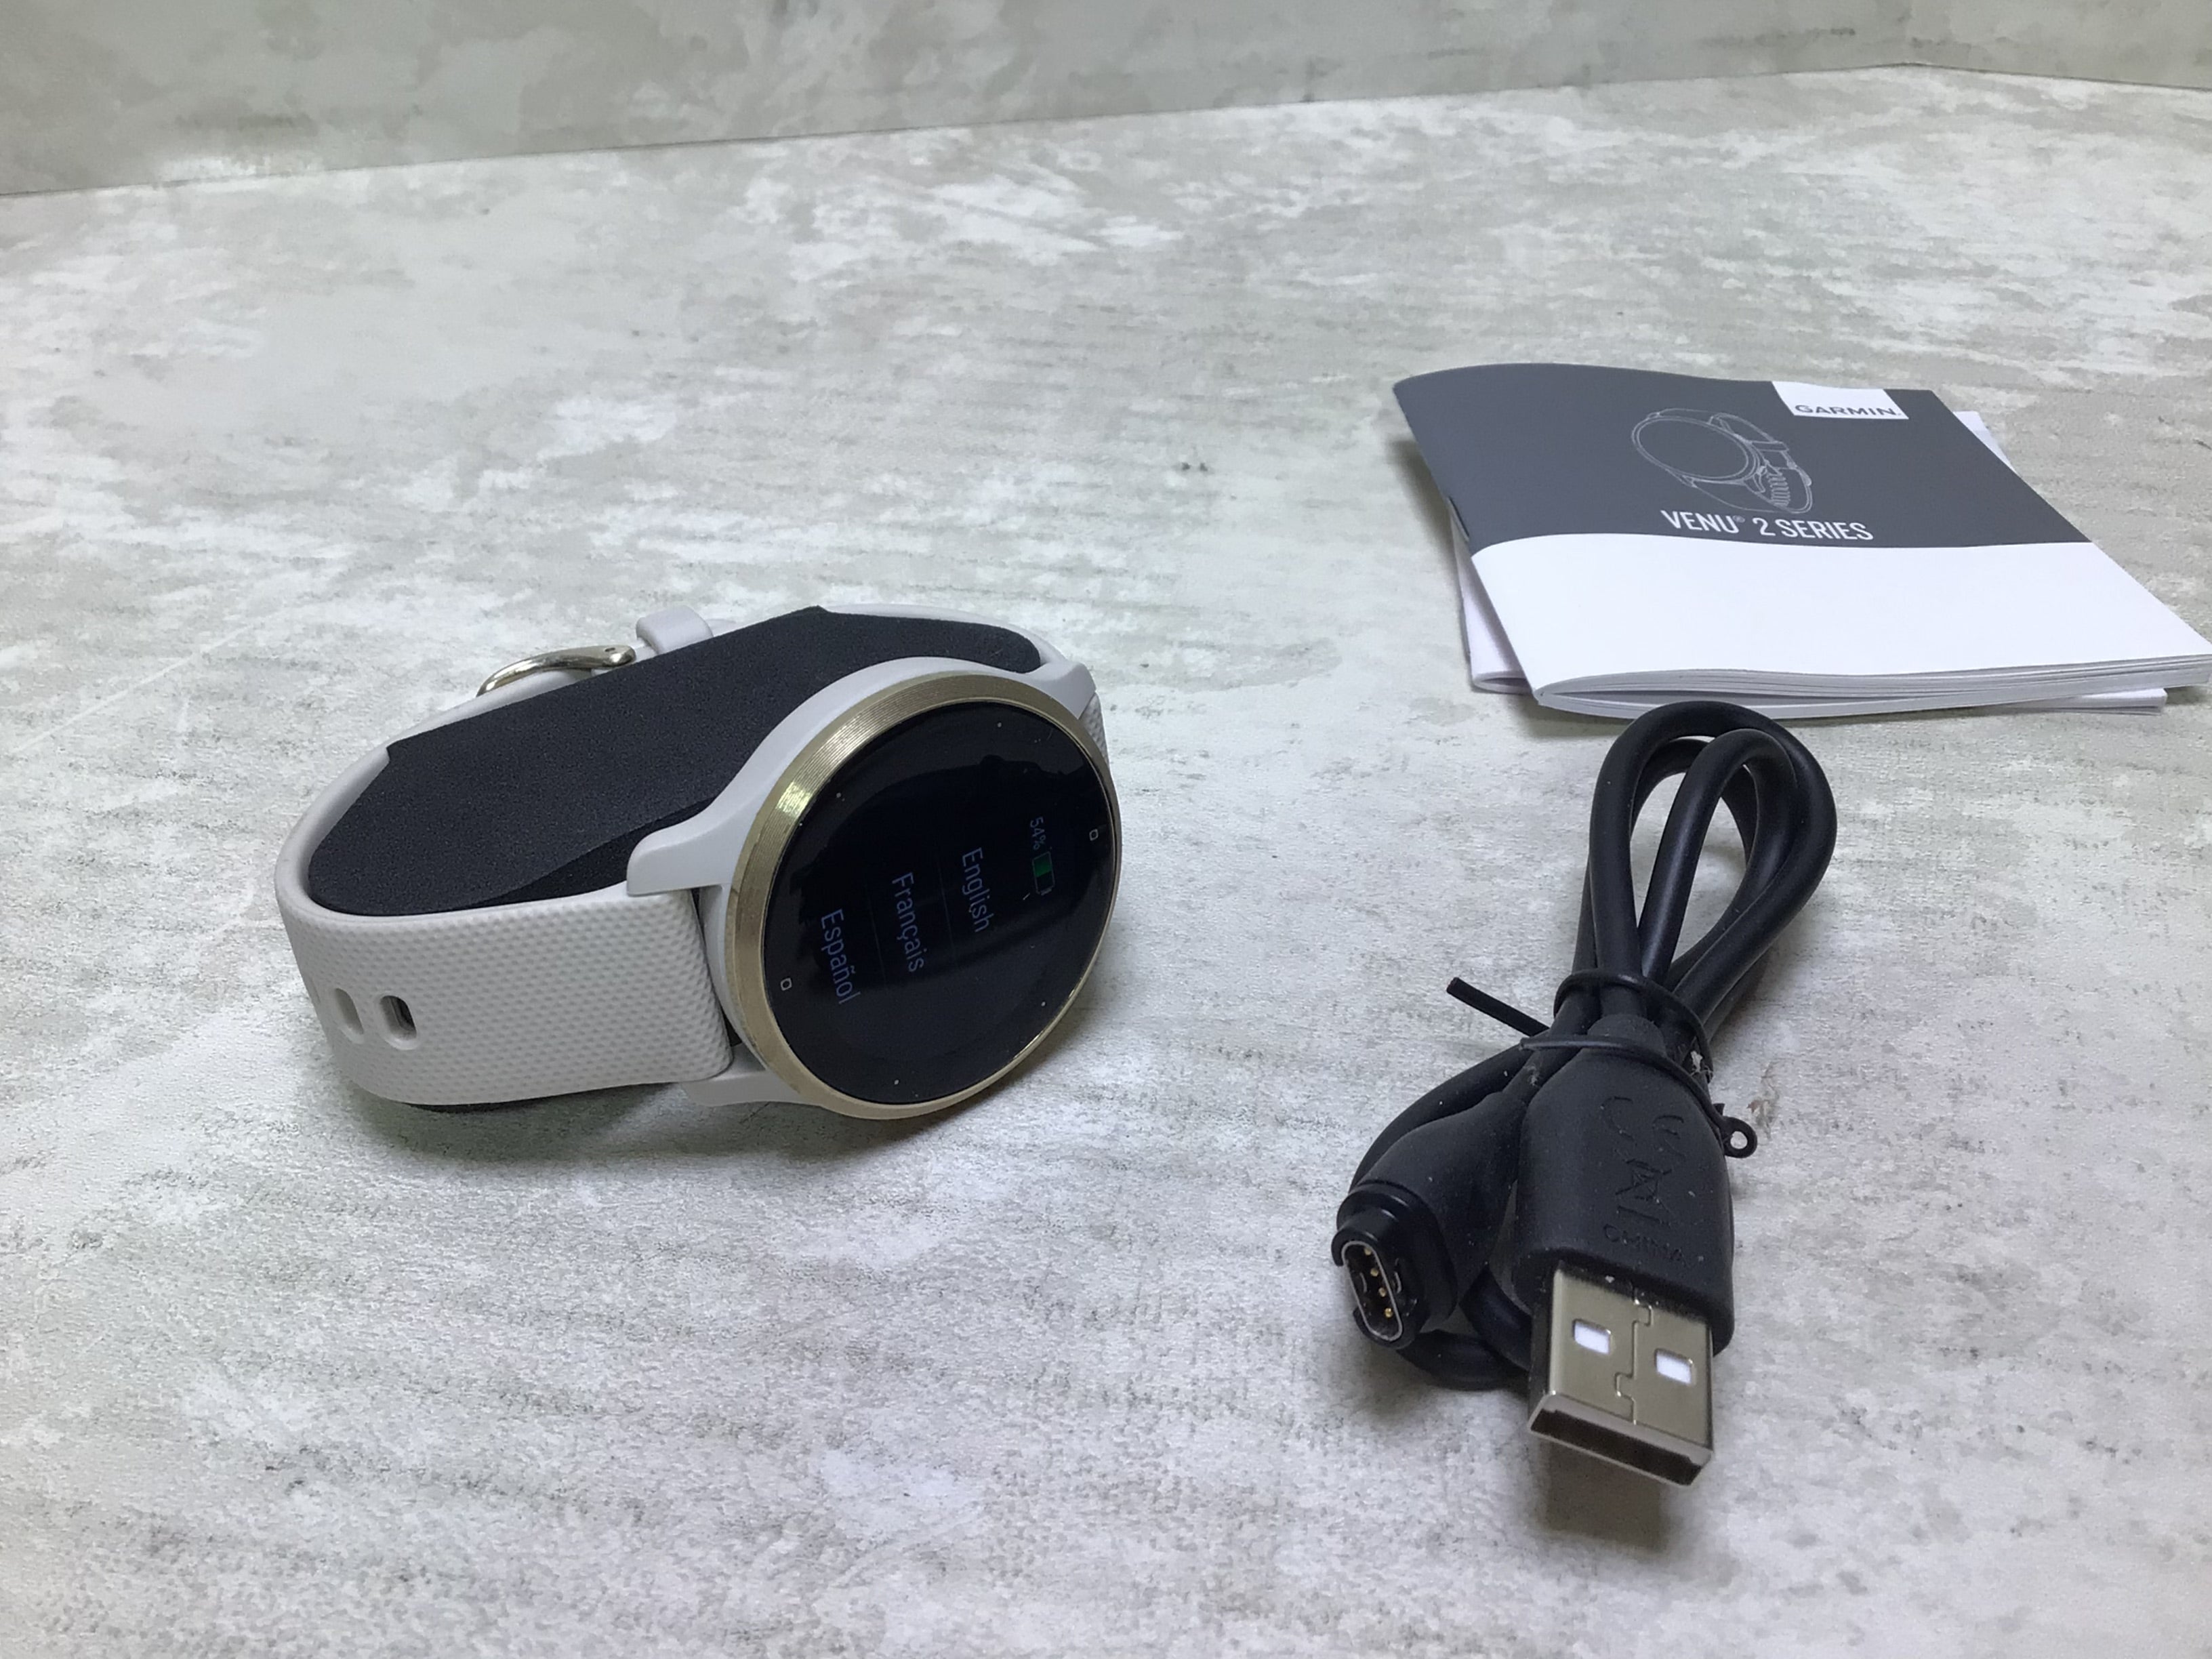 Garmin Venu 2S, Smaller-sized GPS Smartwatch **TESTED** (7679044616430)